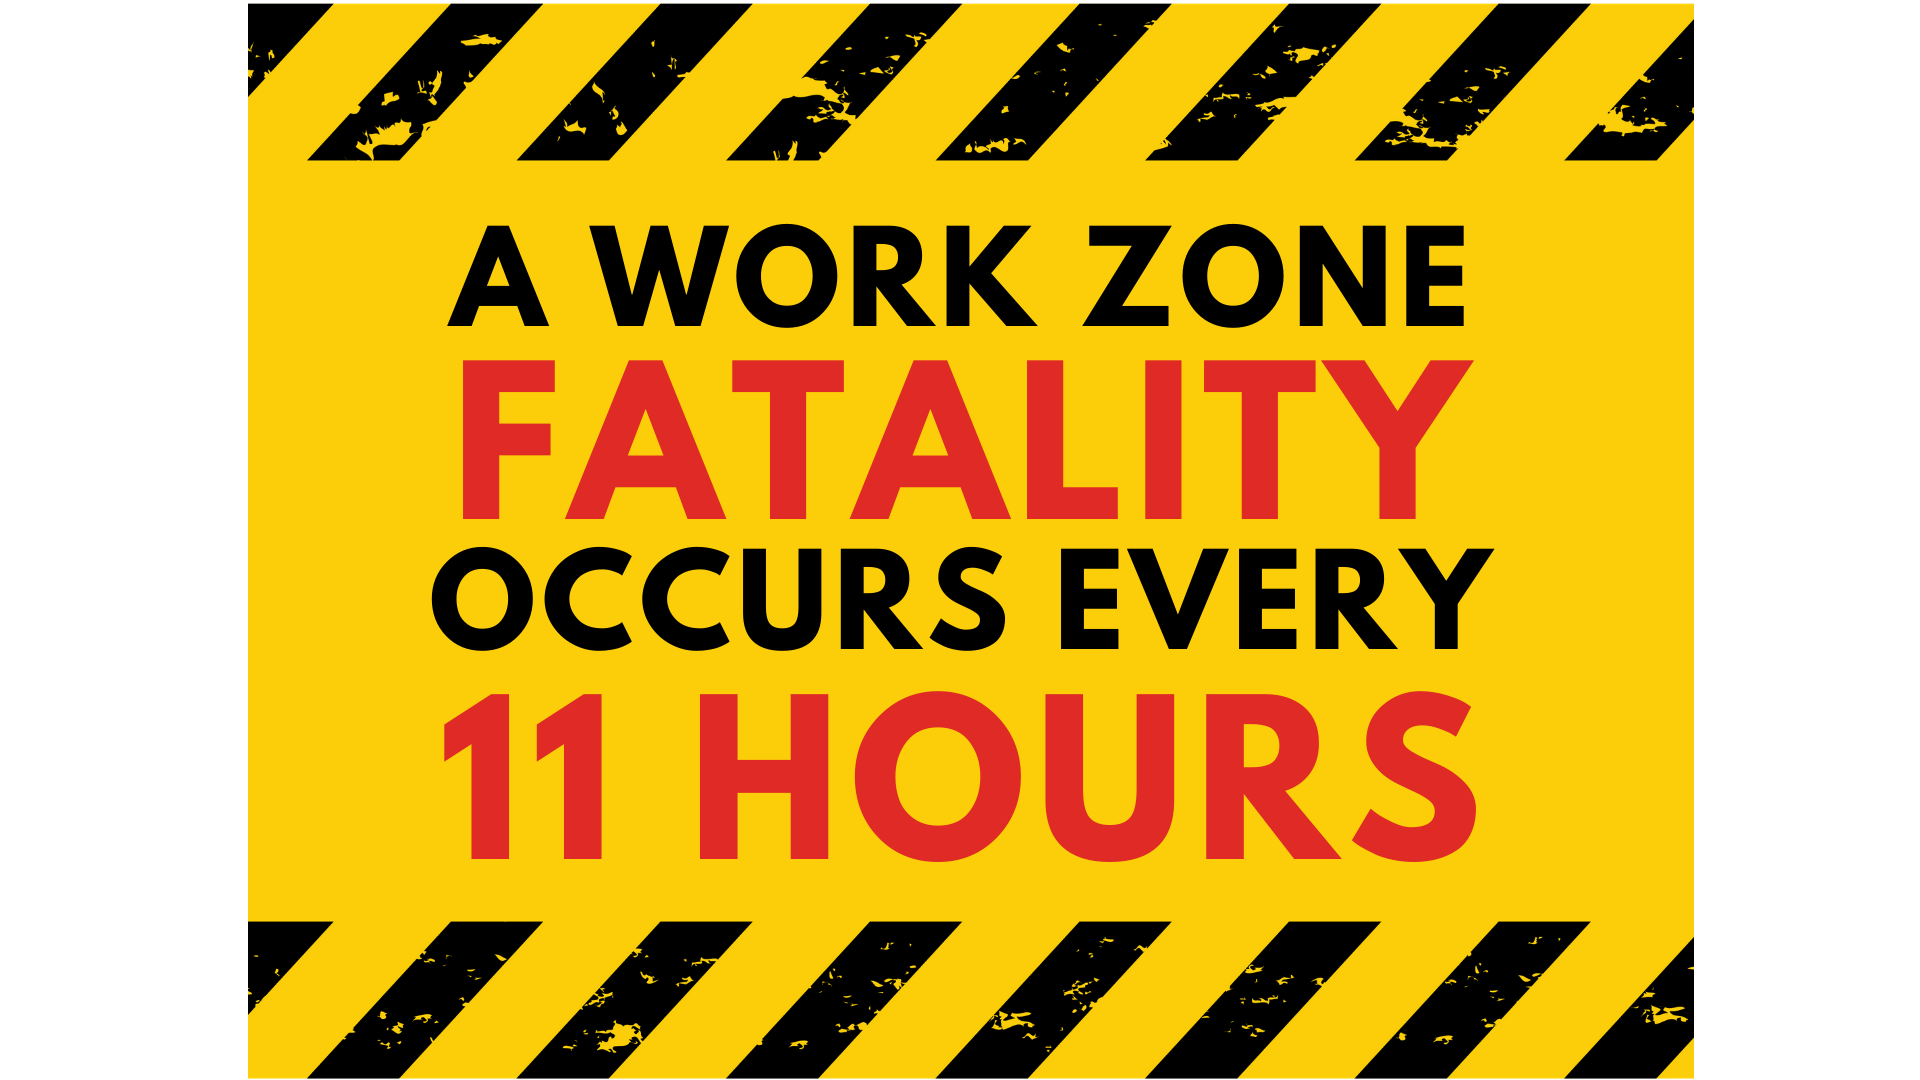 Work zone fatality statistic